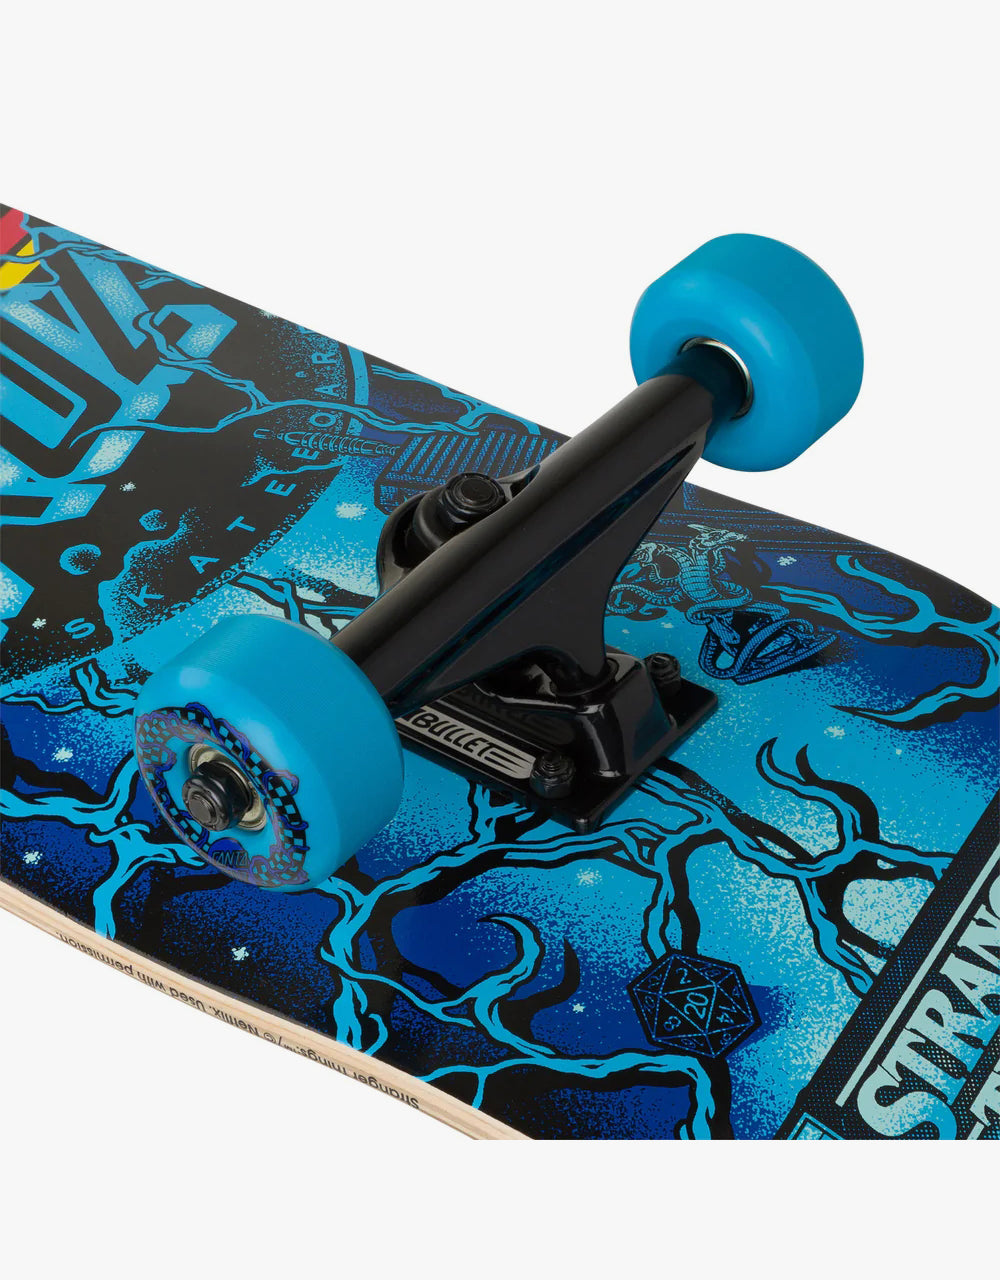 Santa Cruz x Stranger Things Classic Dot Complete Skateboard - 8.25"